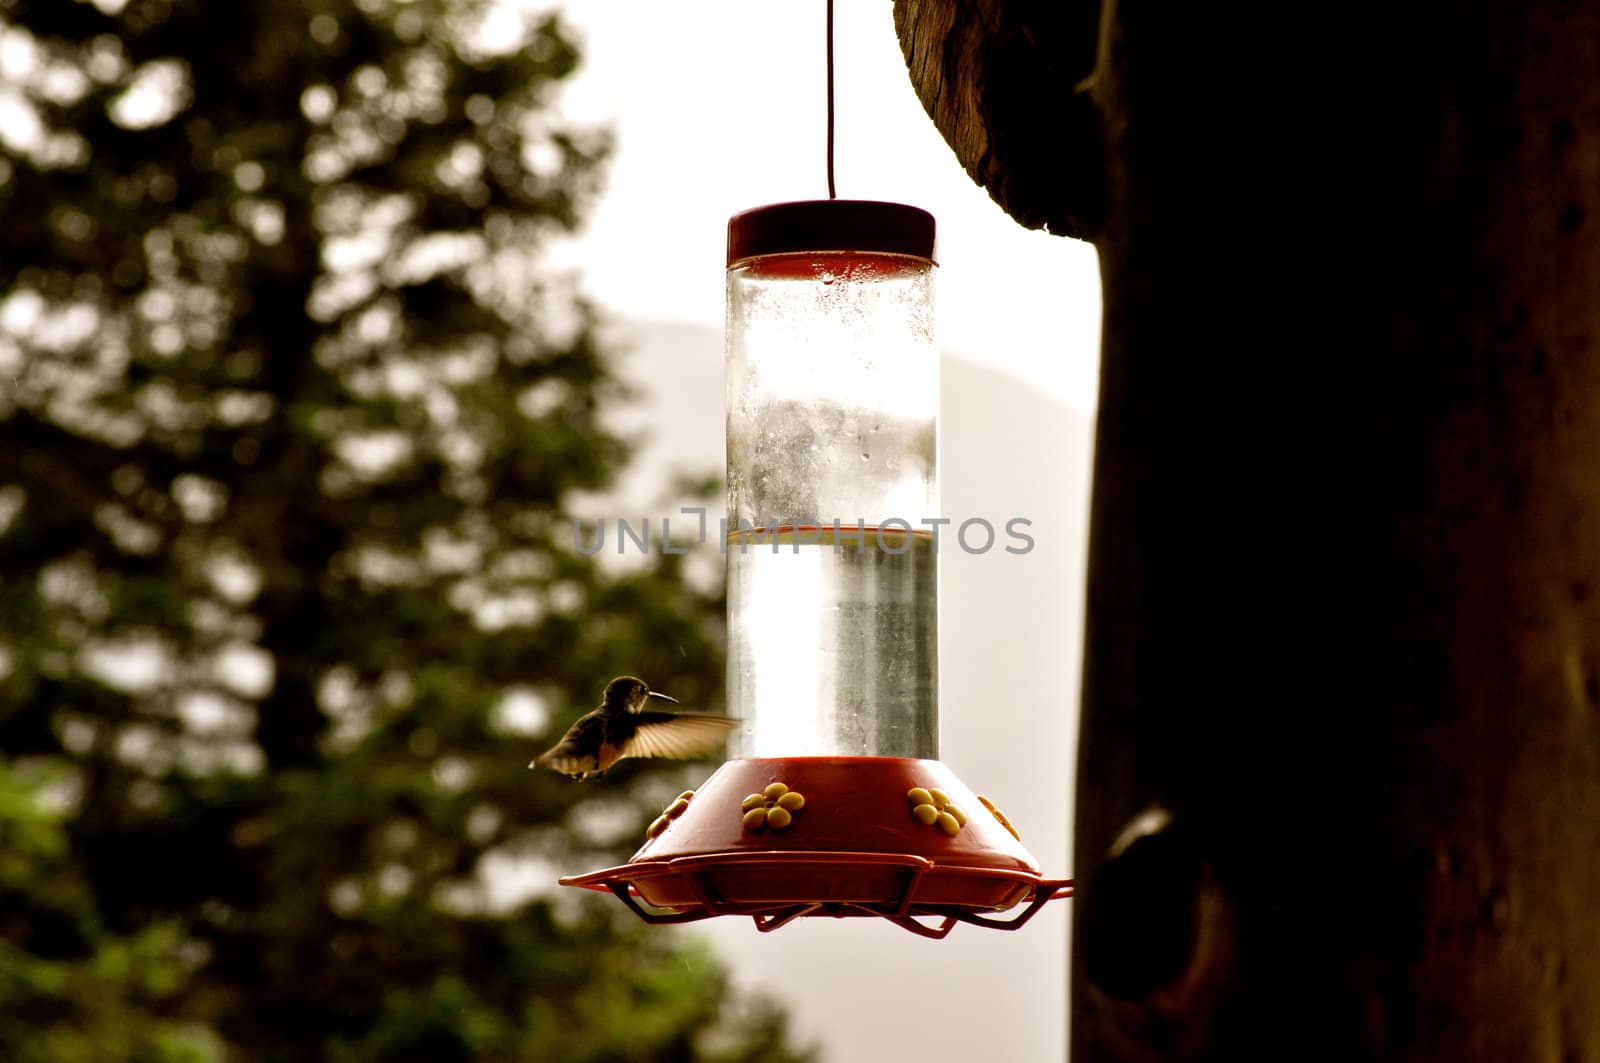 Hummingbird winged flight by RefocusPhoto